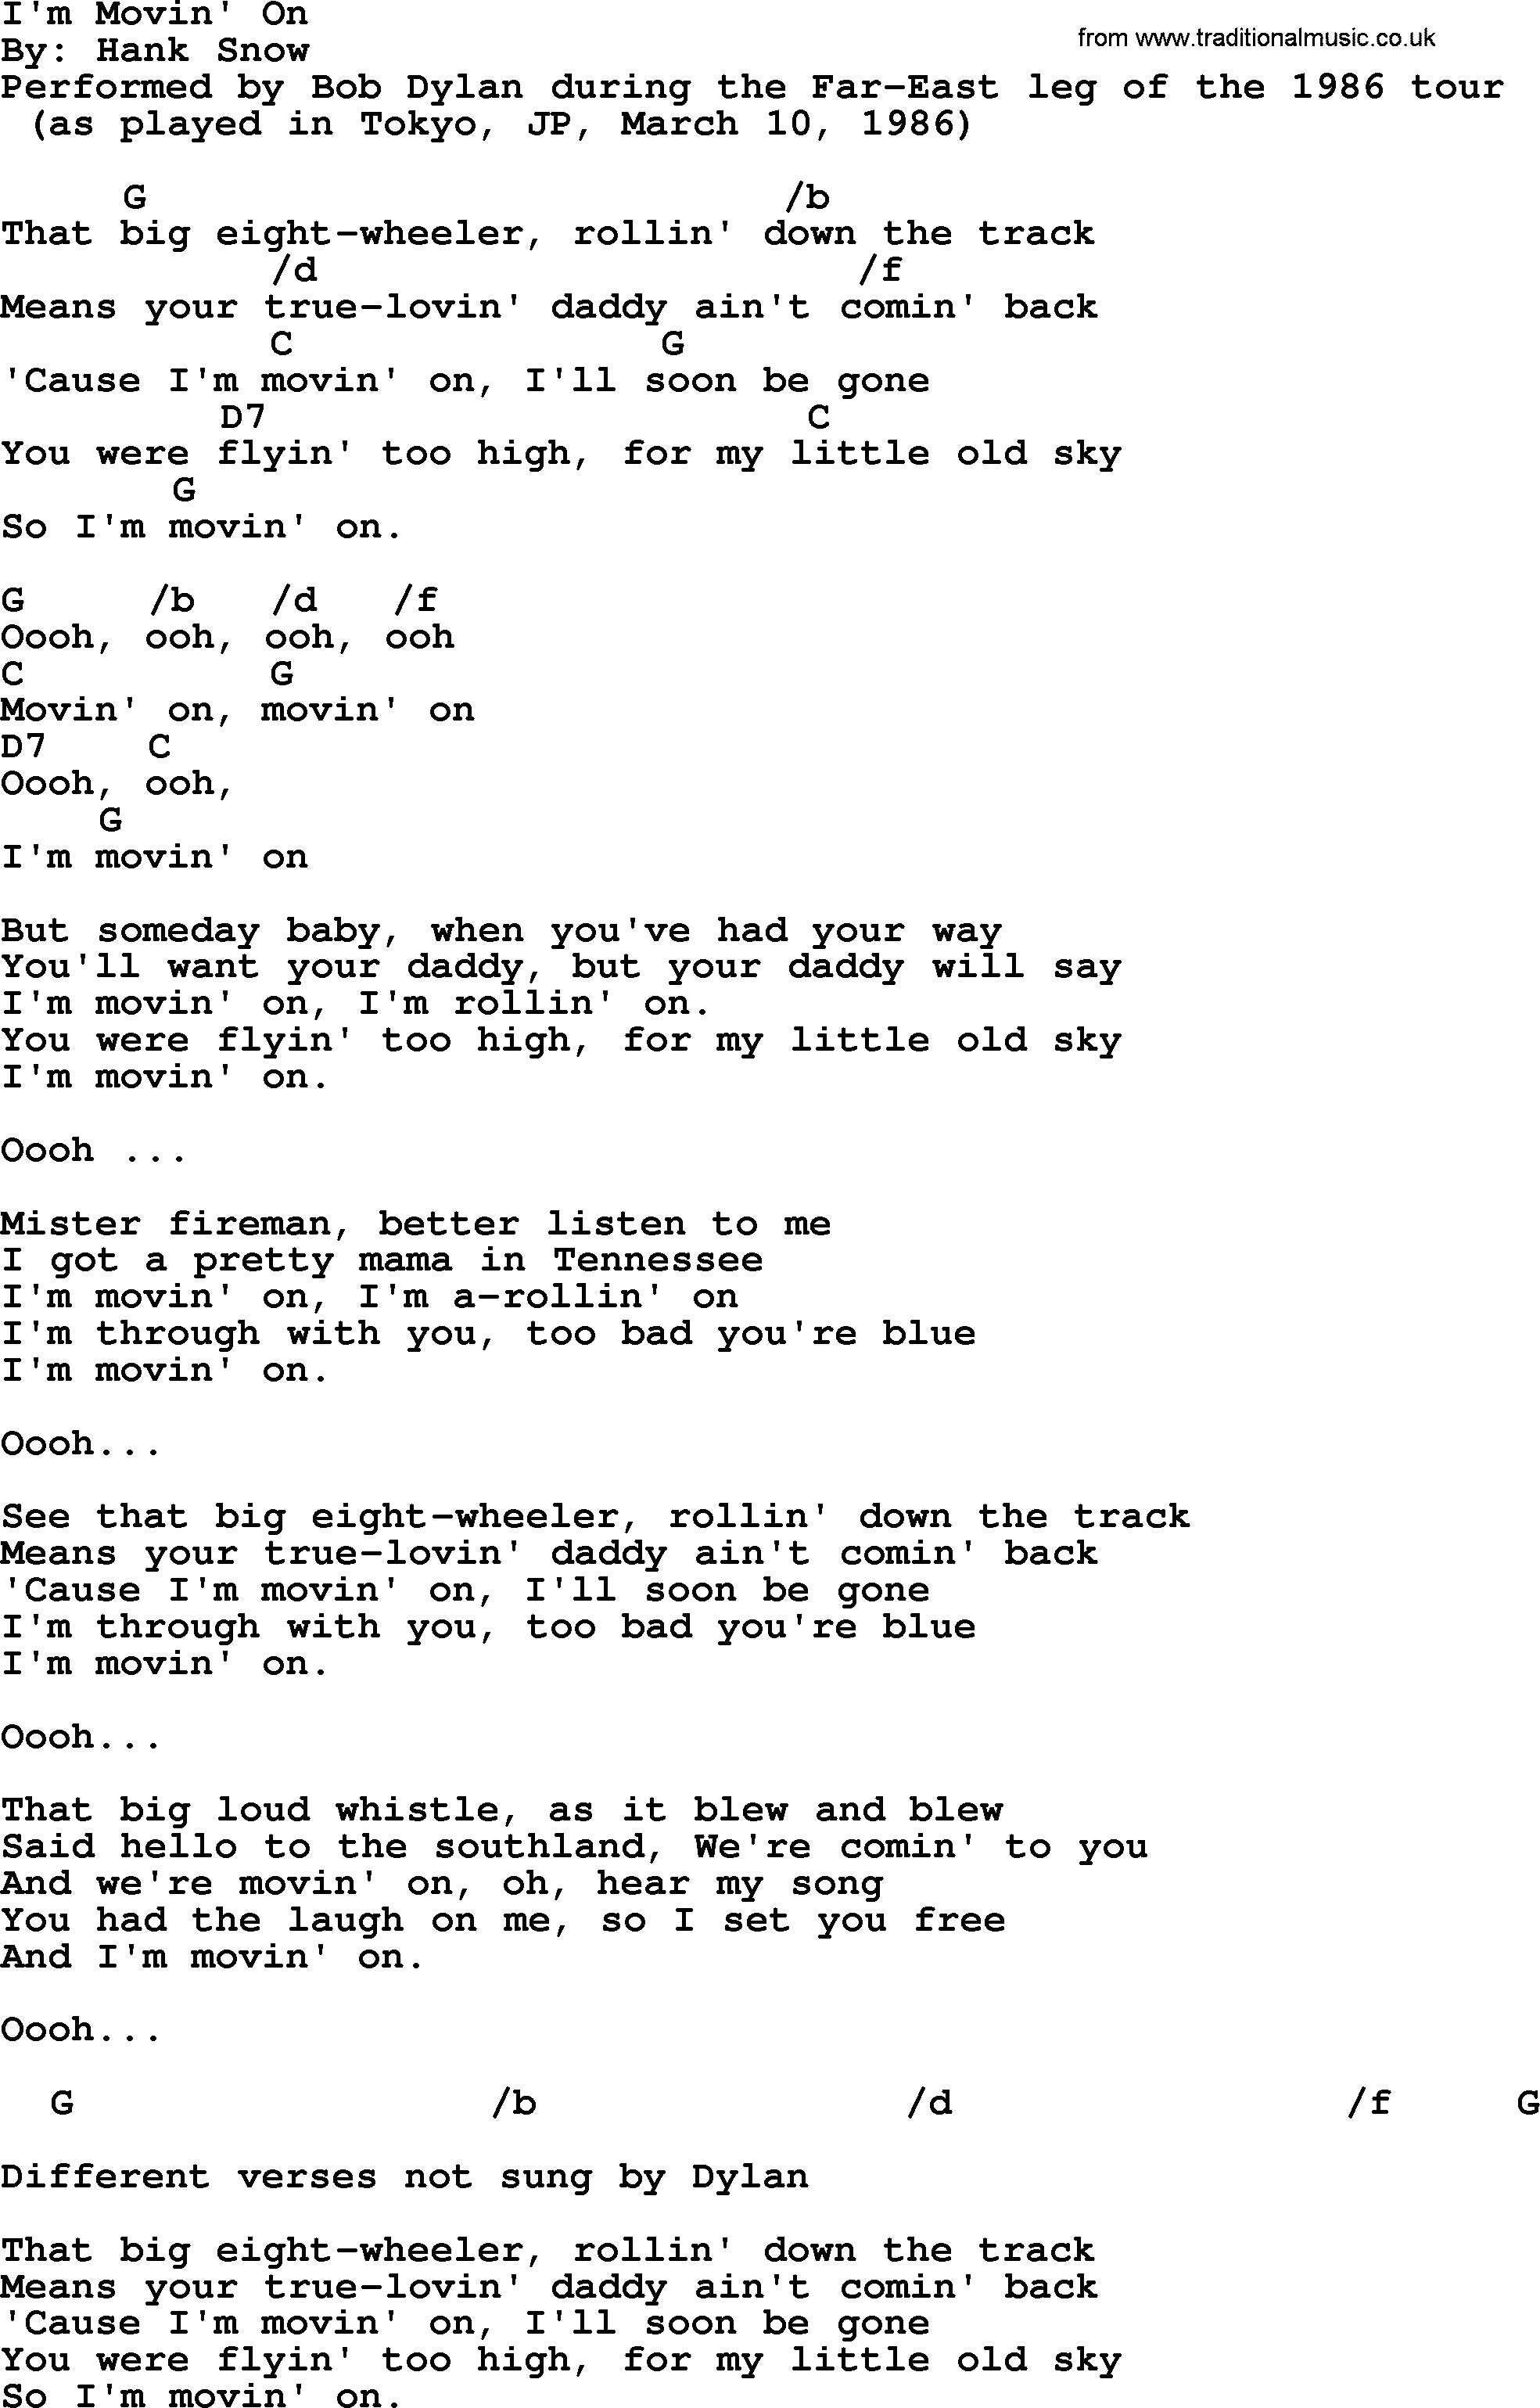 Bob Dylan song, lyrics with chords - I'm Movin' On